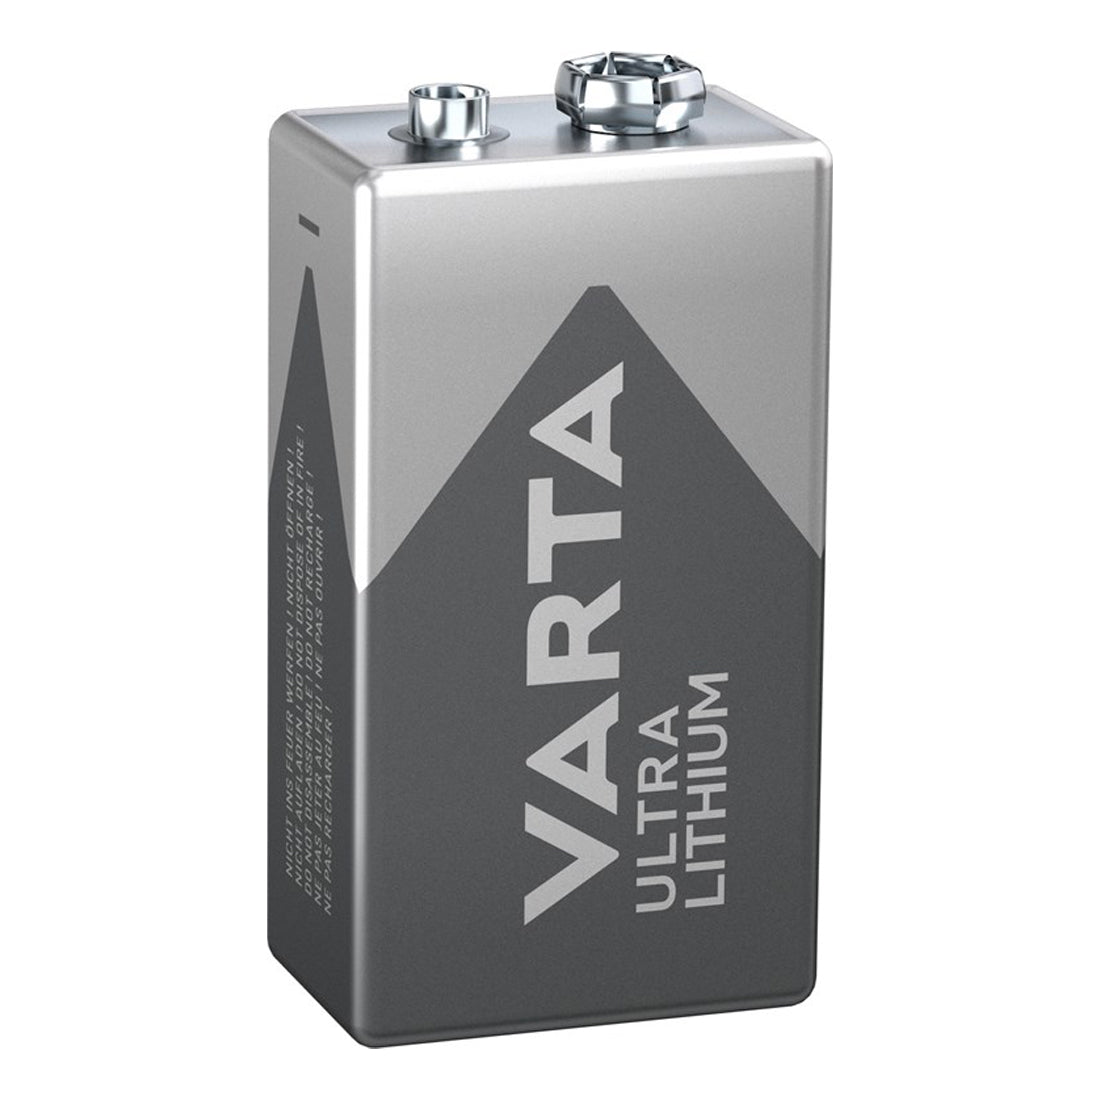 Varta Ultra Lithium 9V Block Batterie 6F22/9V 6122 E-Block Rauchmelder Batterien